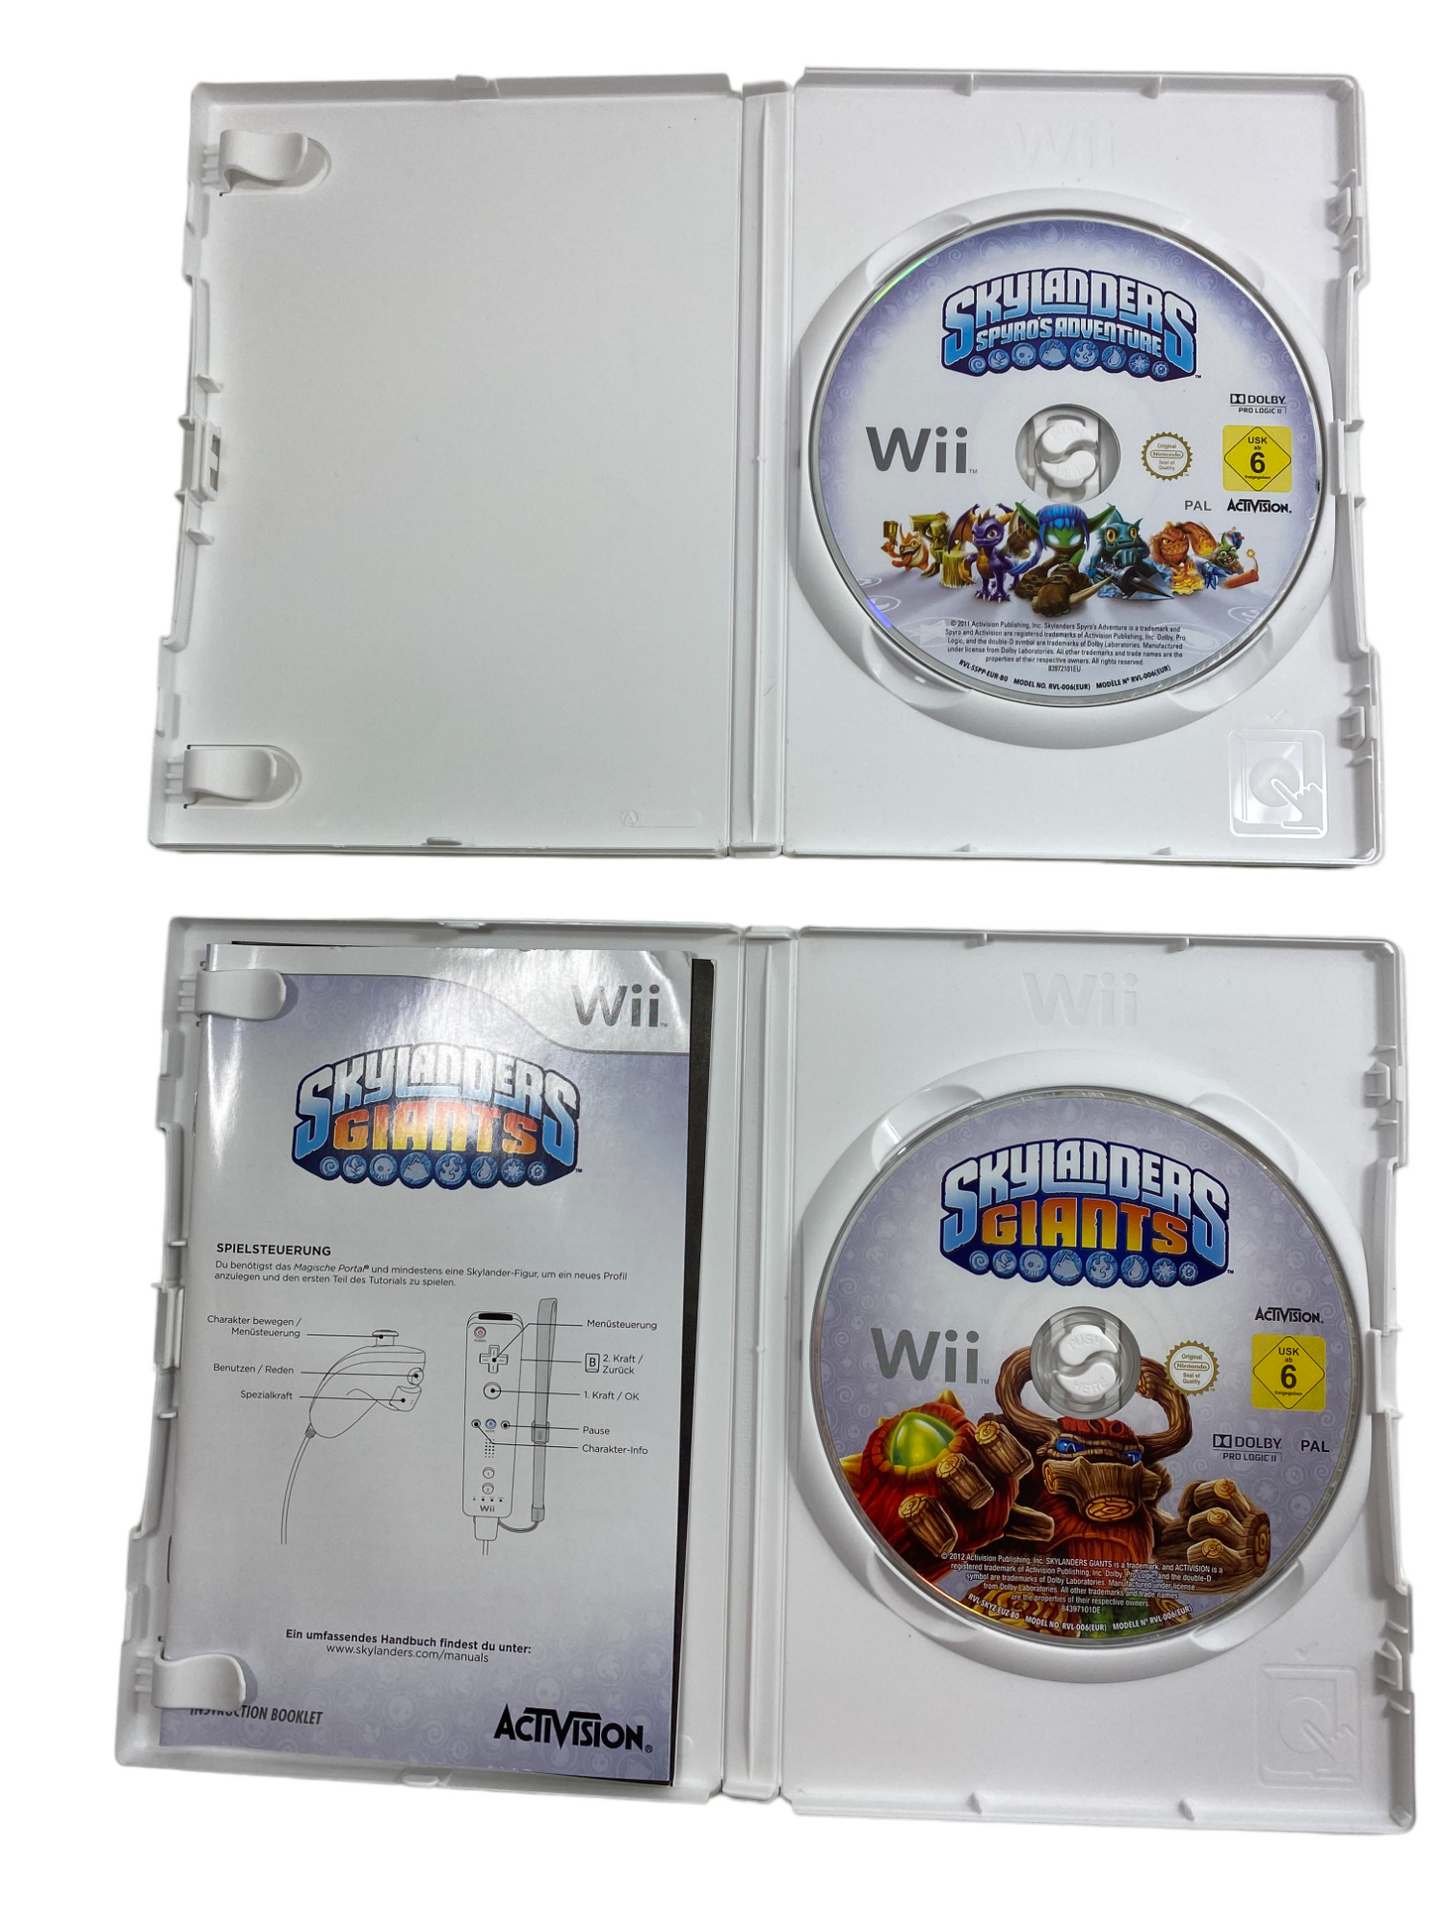 Skylanders Giants + Spyro Adventure - Nintendo Wii (CDs KRATZFREI)